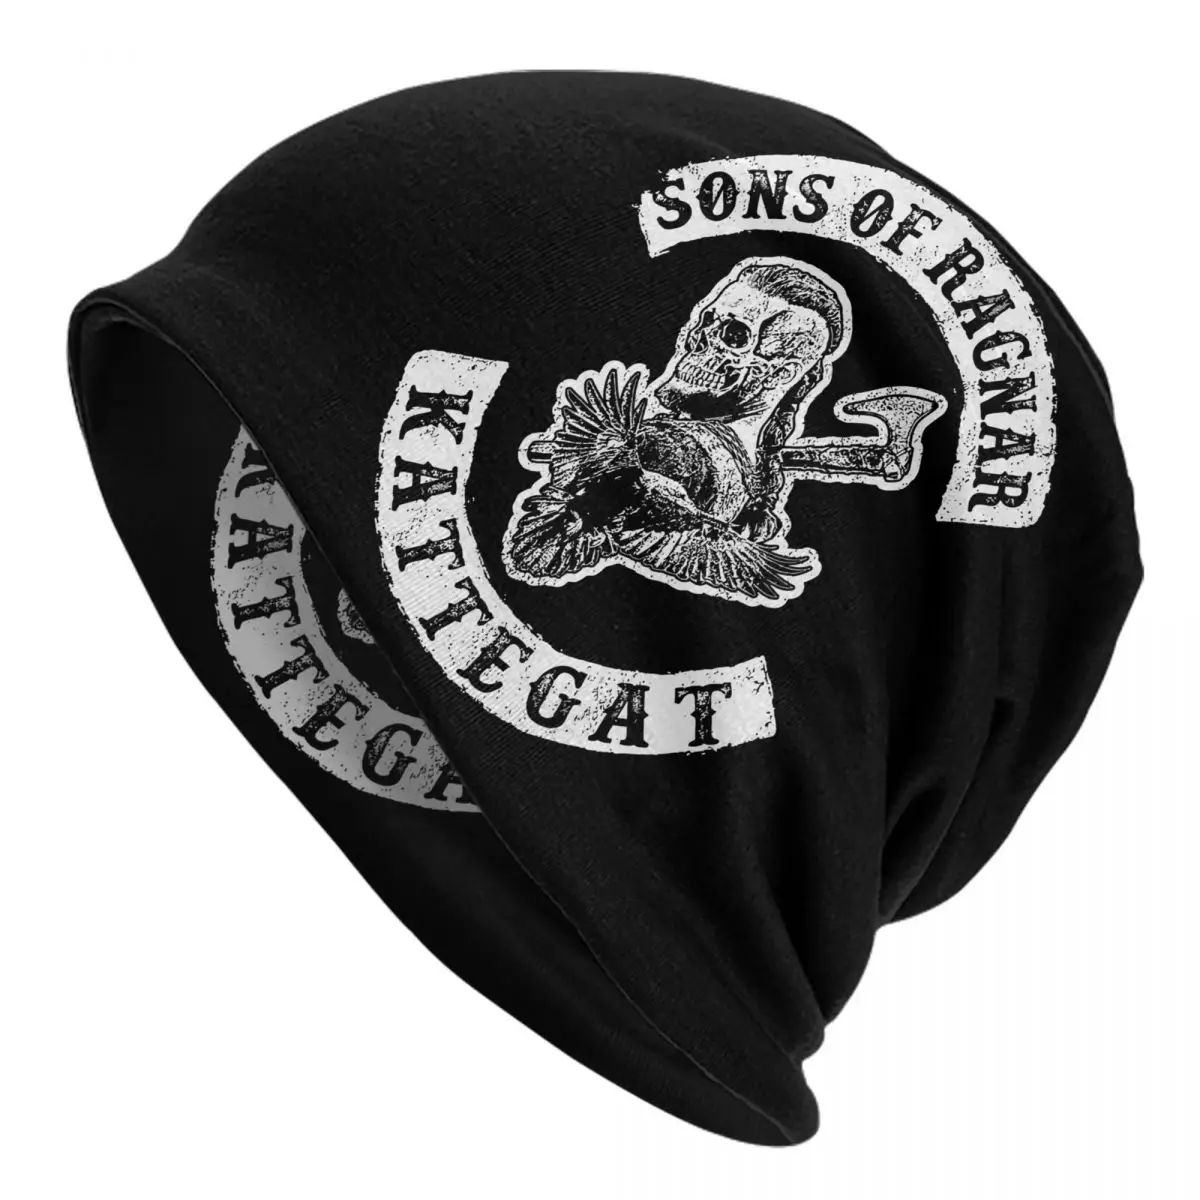 Sons Of Ragnar Kattegat Adult Men's Women's Knit Hat Keep warm winter Funny knitted hat